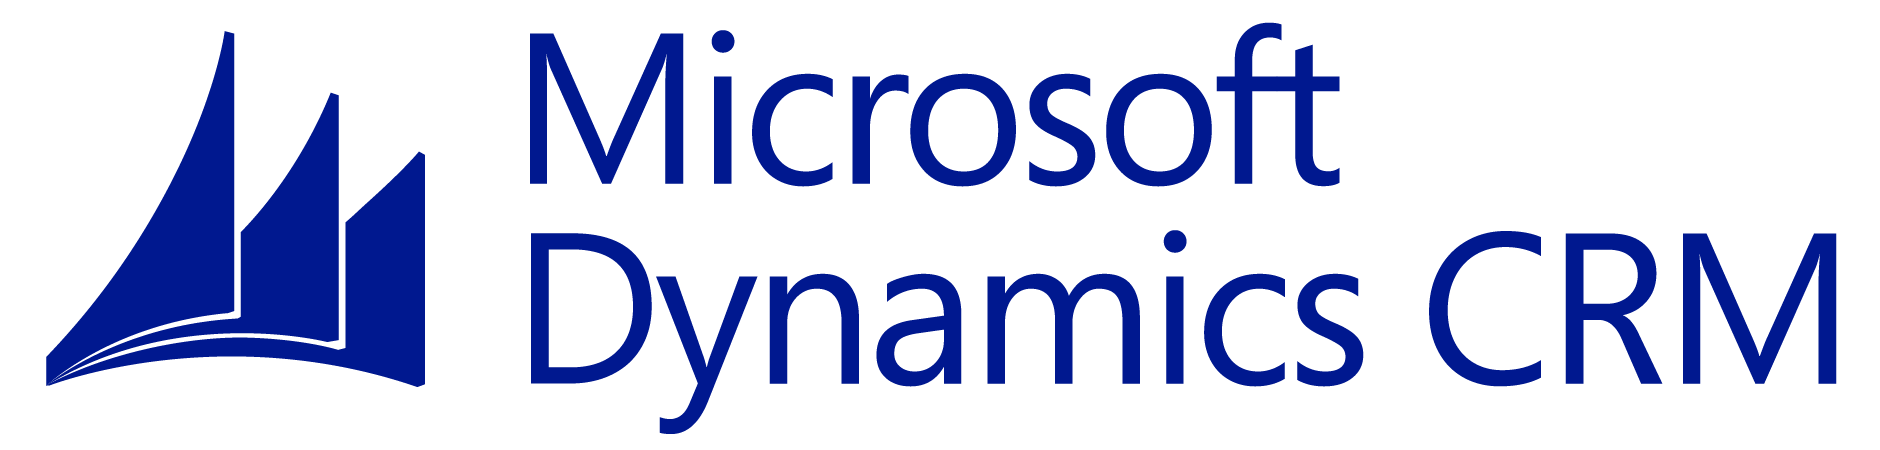 MS Dynamics CRM Logo - Management Training, Business Training and IT Training